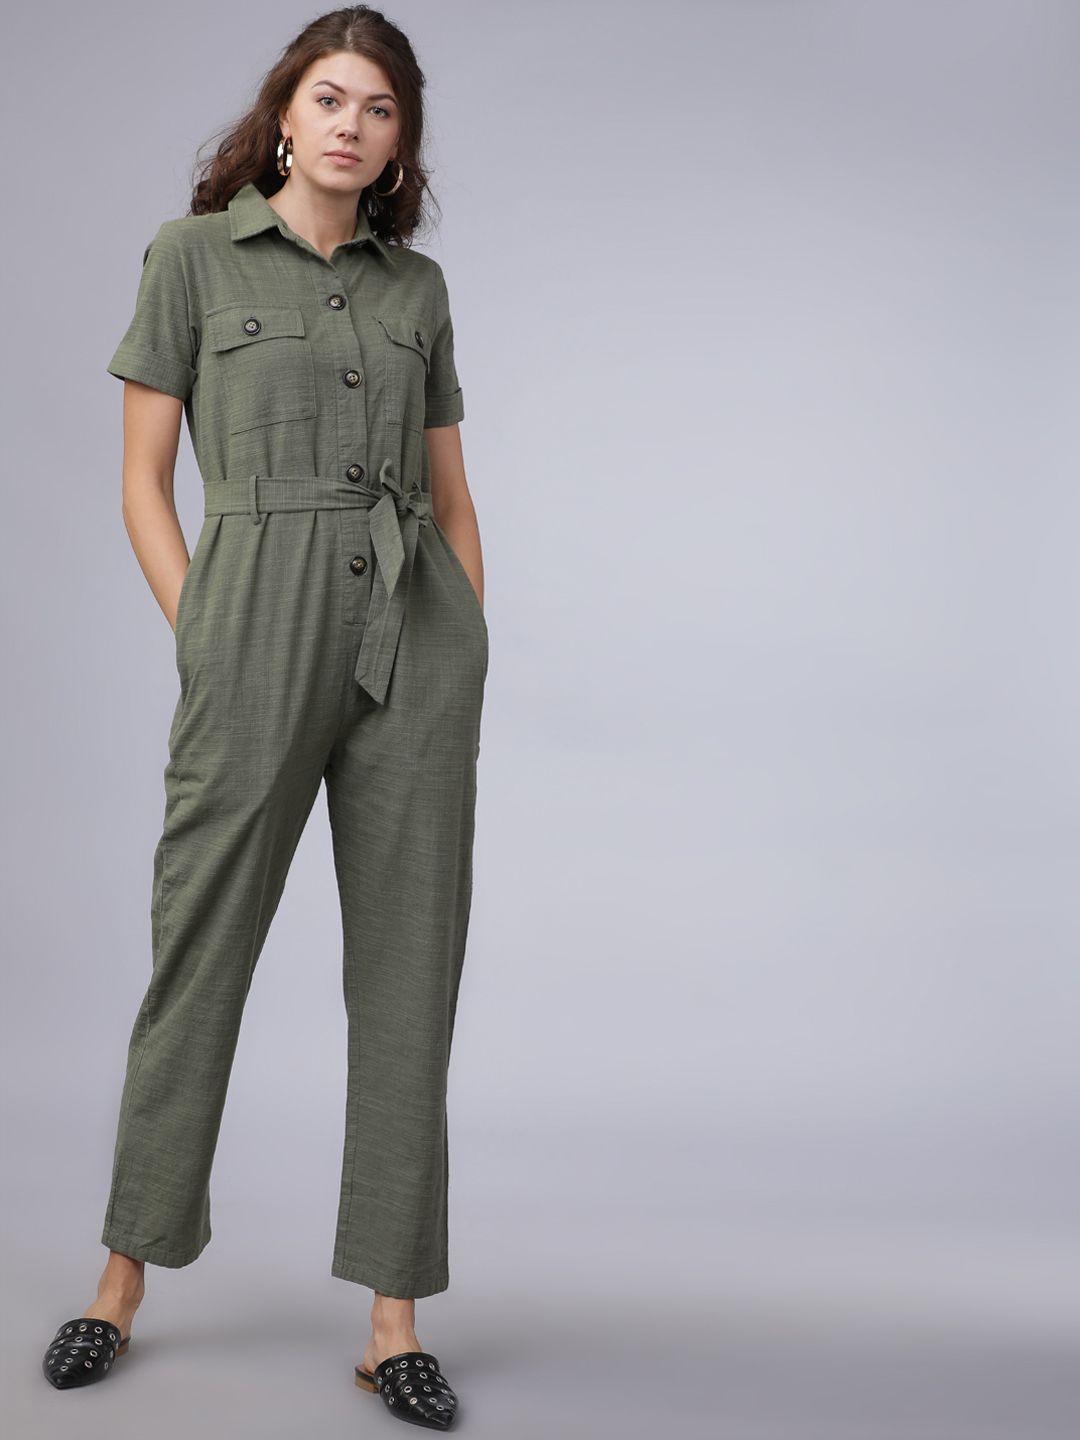 tokyo talkies women sage green solid basic jumpsuit